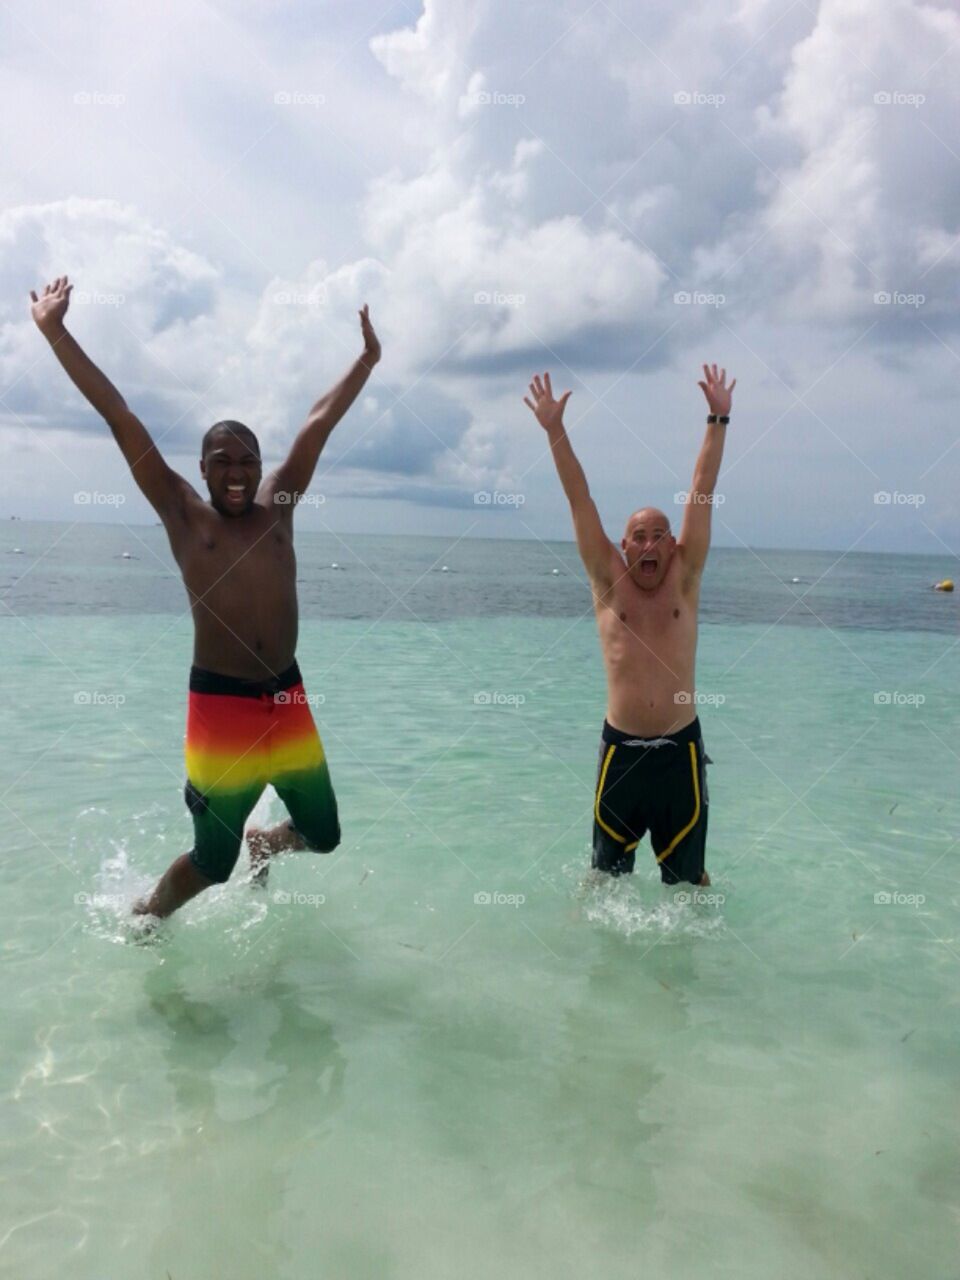 Let's jump. Freeport, Bahamas